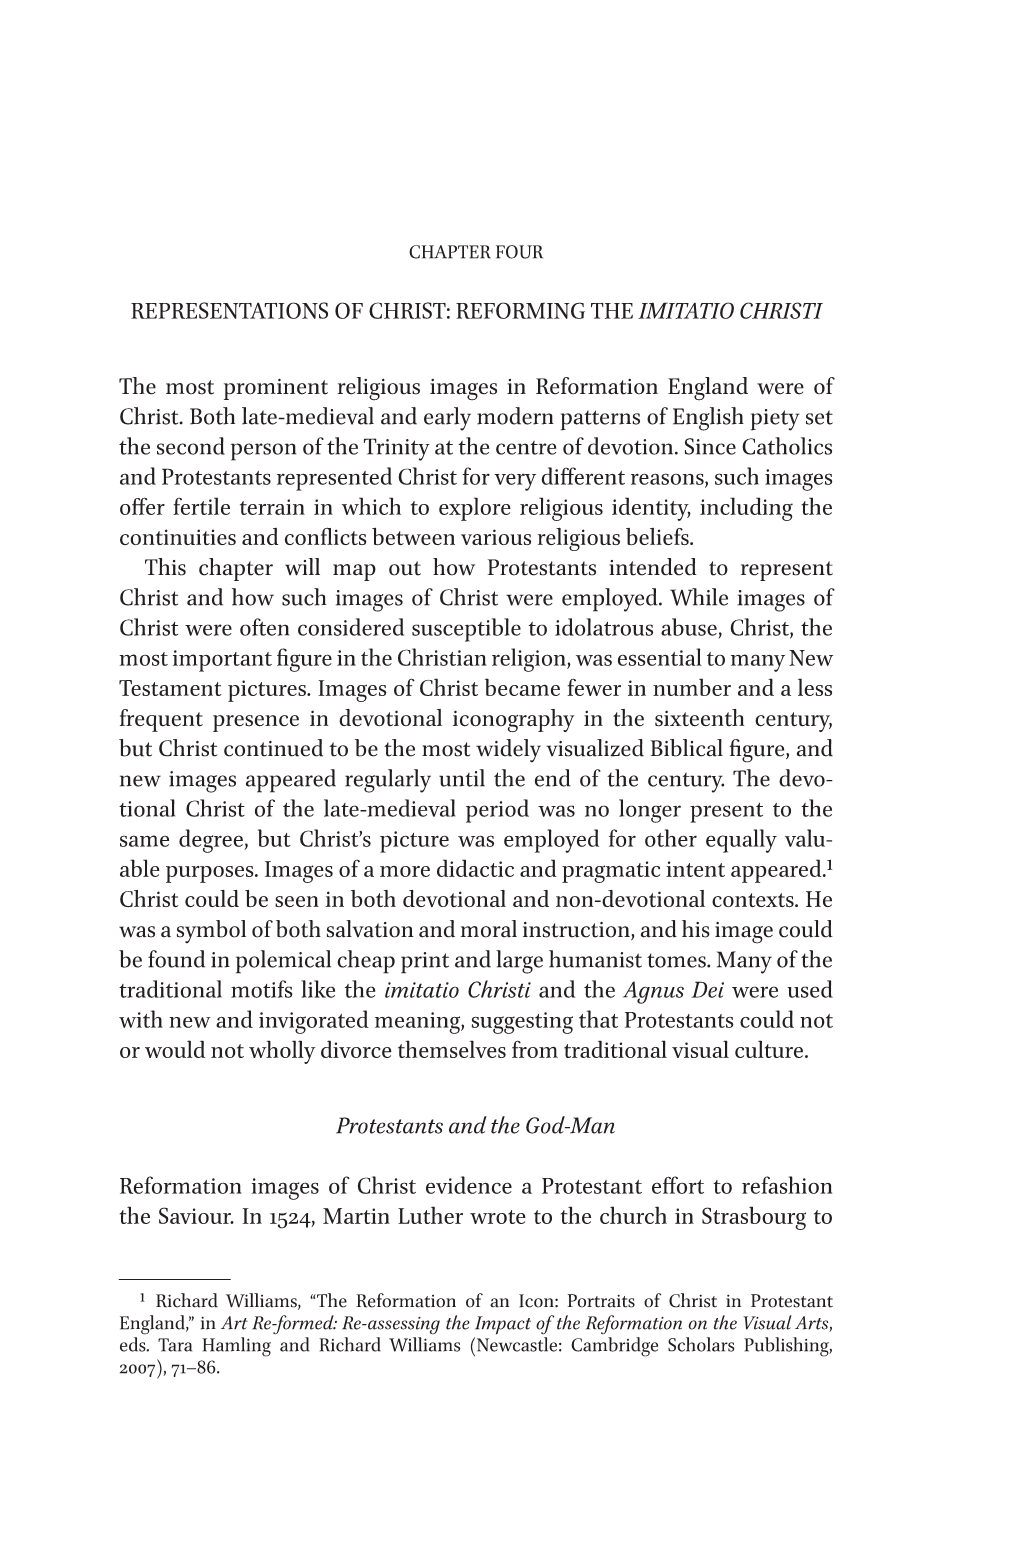 Representations of Christ: Reforming the Imitatio Christi